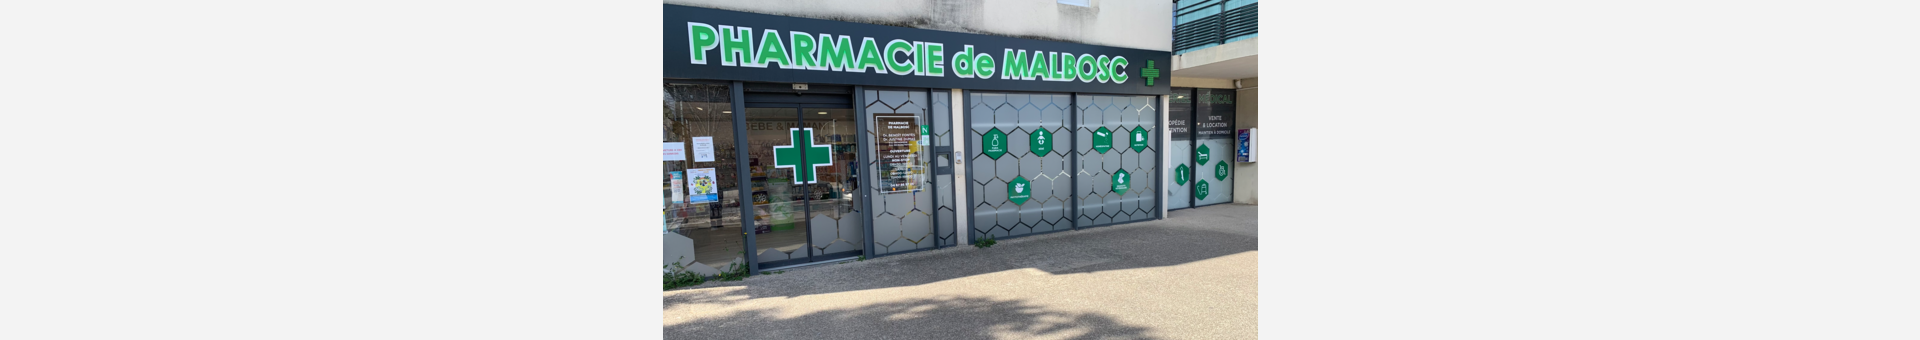 Pharmacie de Malbosc,Montpellier